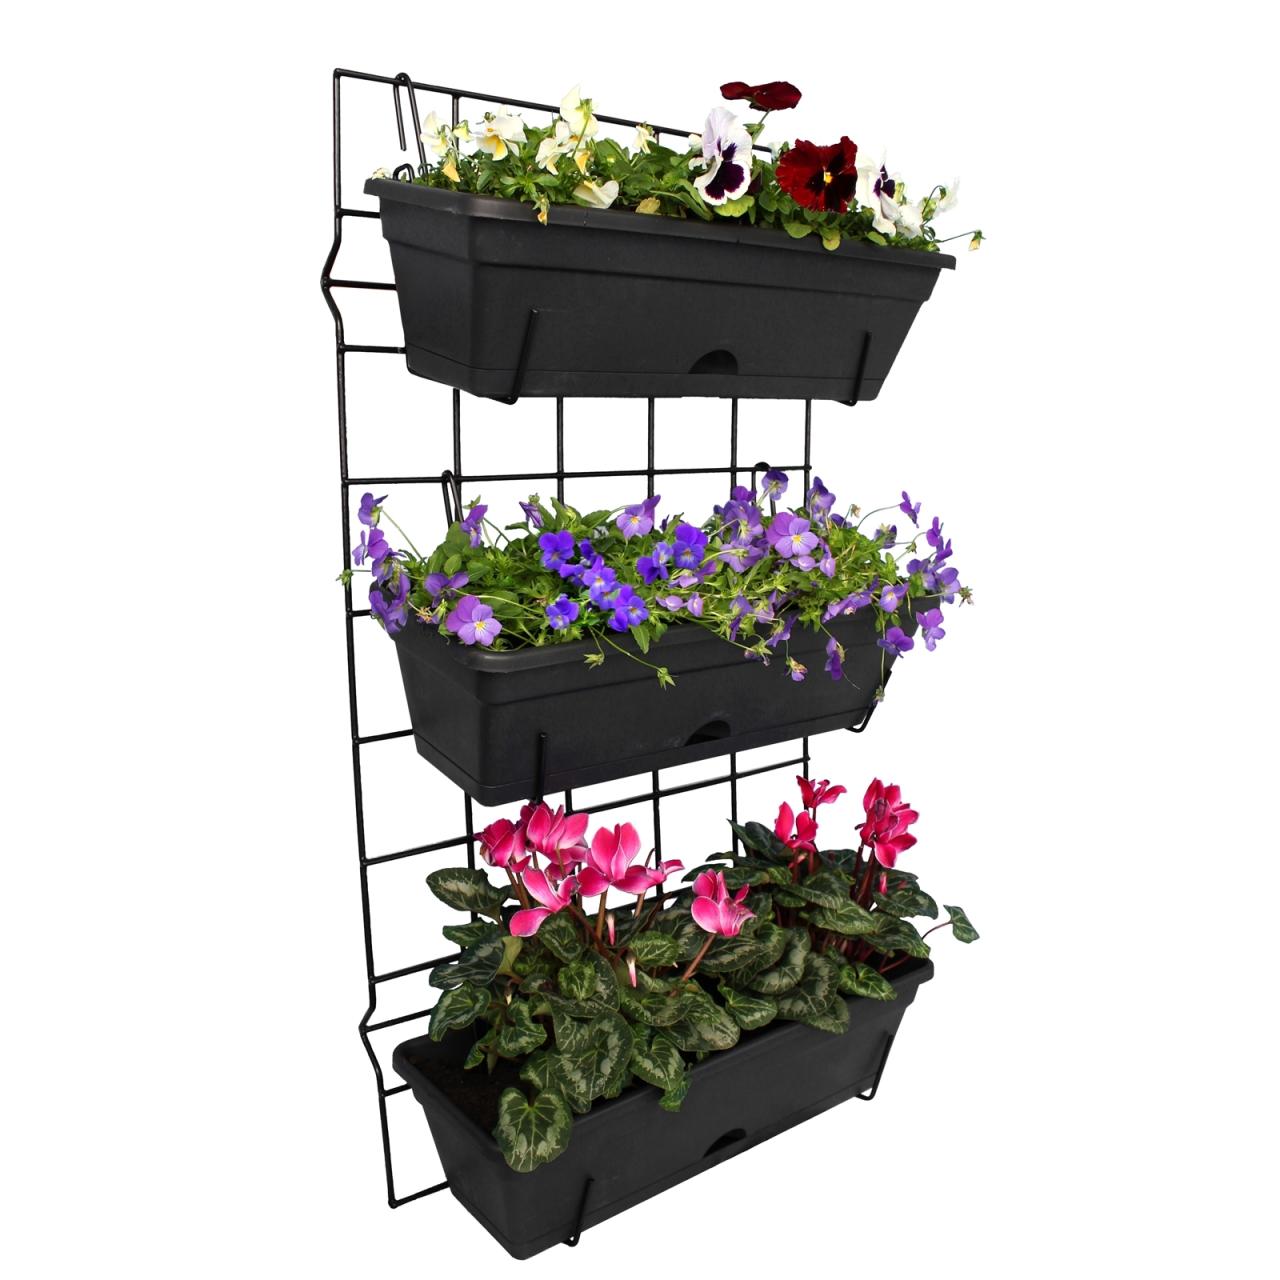 Hanging Plants Indoor | Herb Pots at Bunnings: A Comprehensive Guide